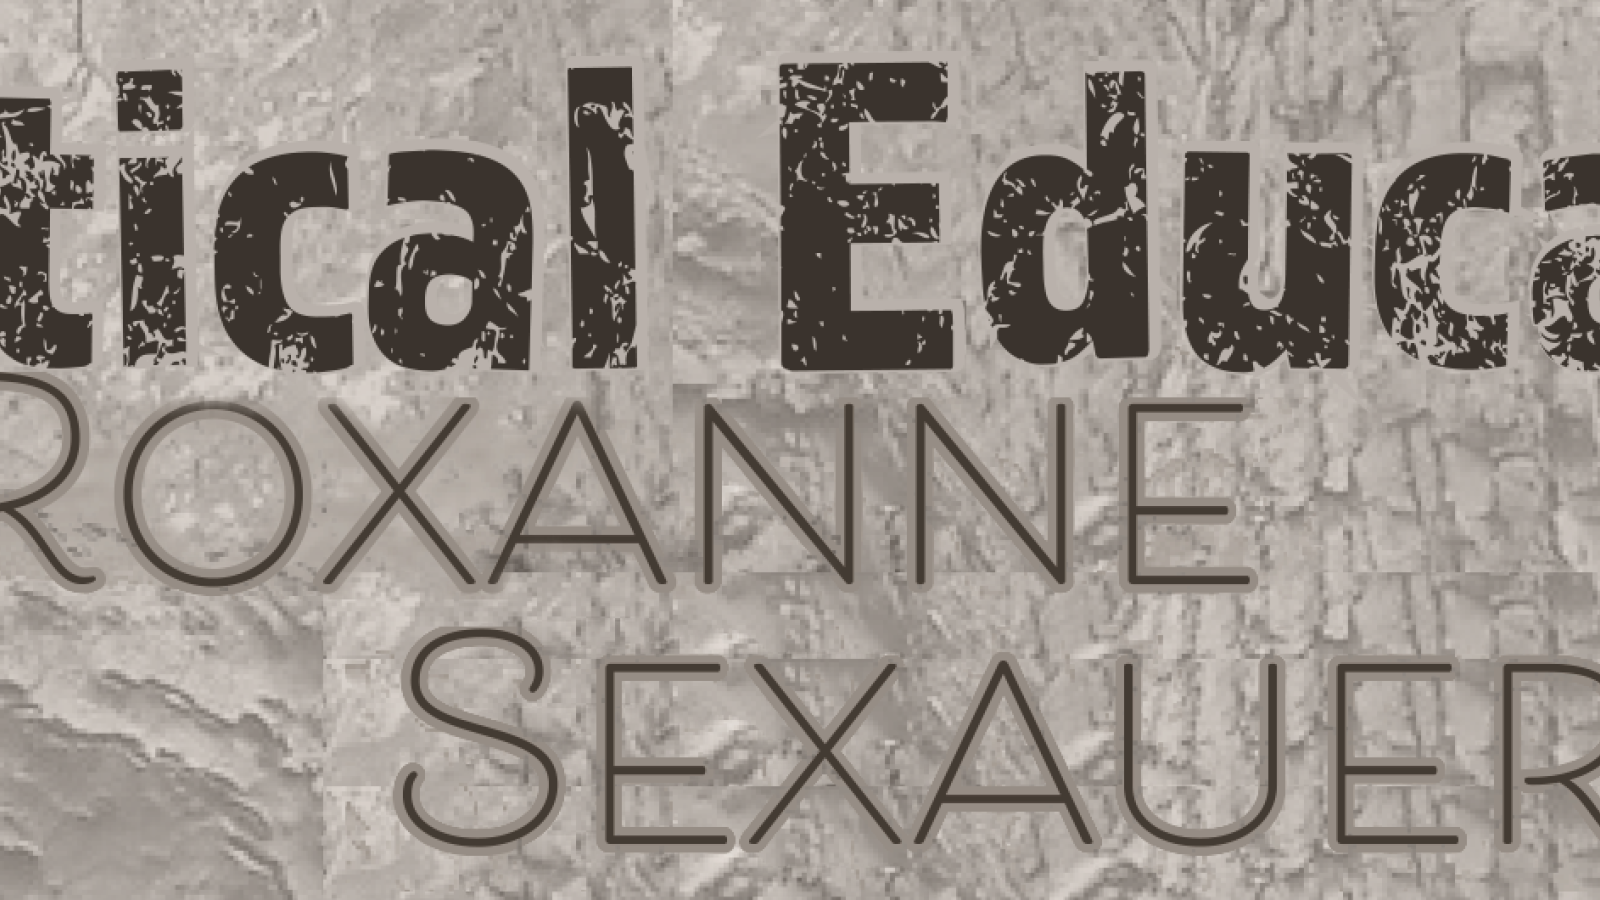 Banner Image - Practical Education Featuring Roxanne Sexauer Professor Emerita, California State University Long Beach